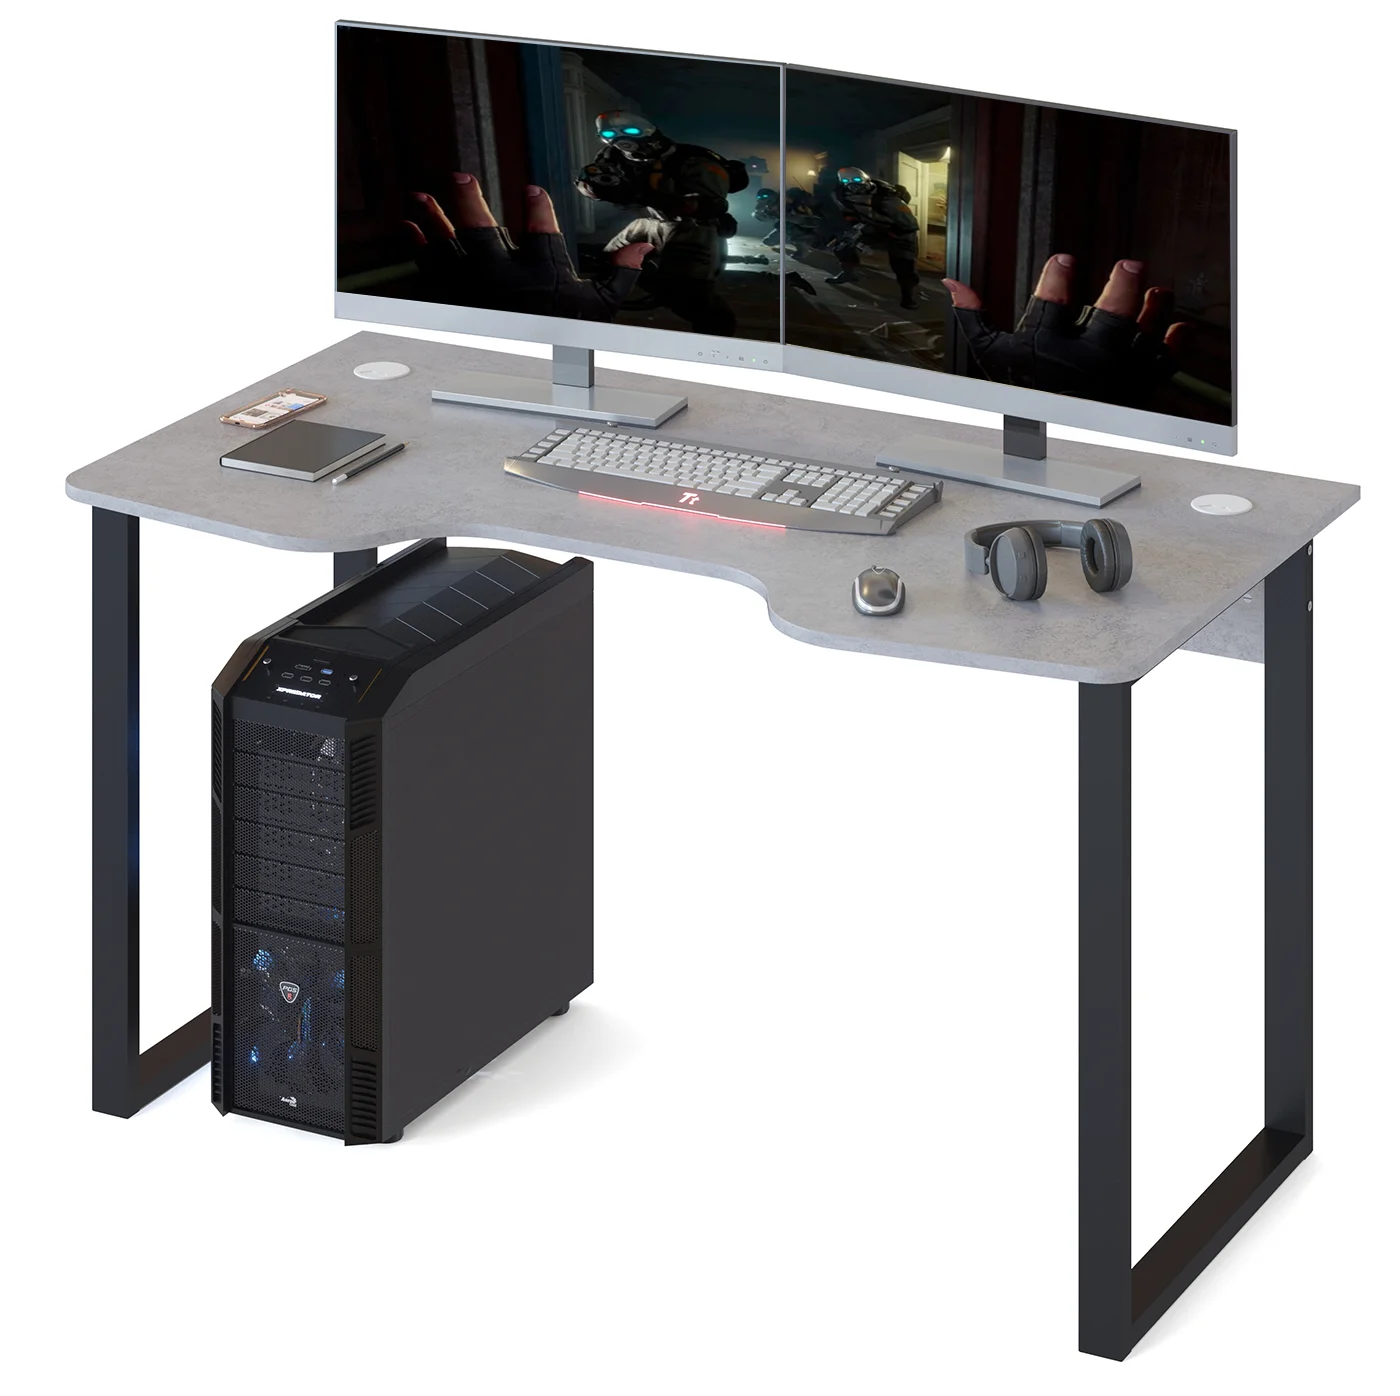 Сокол компьютерный стол КСТ-19, ШХГХВ: 135х73х74 см, цвет: черный/красный